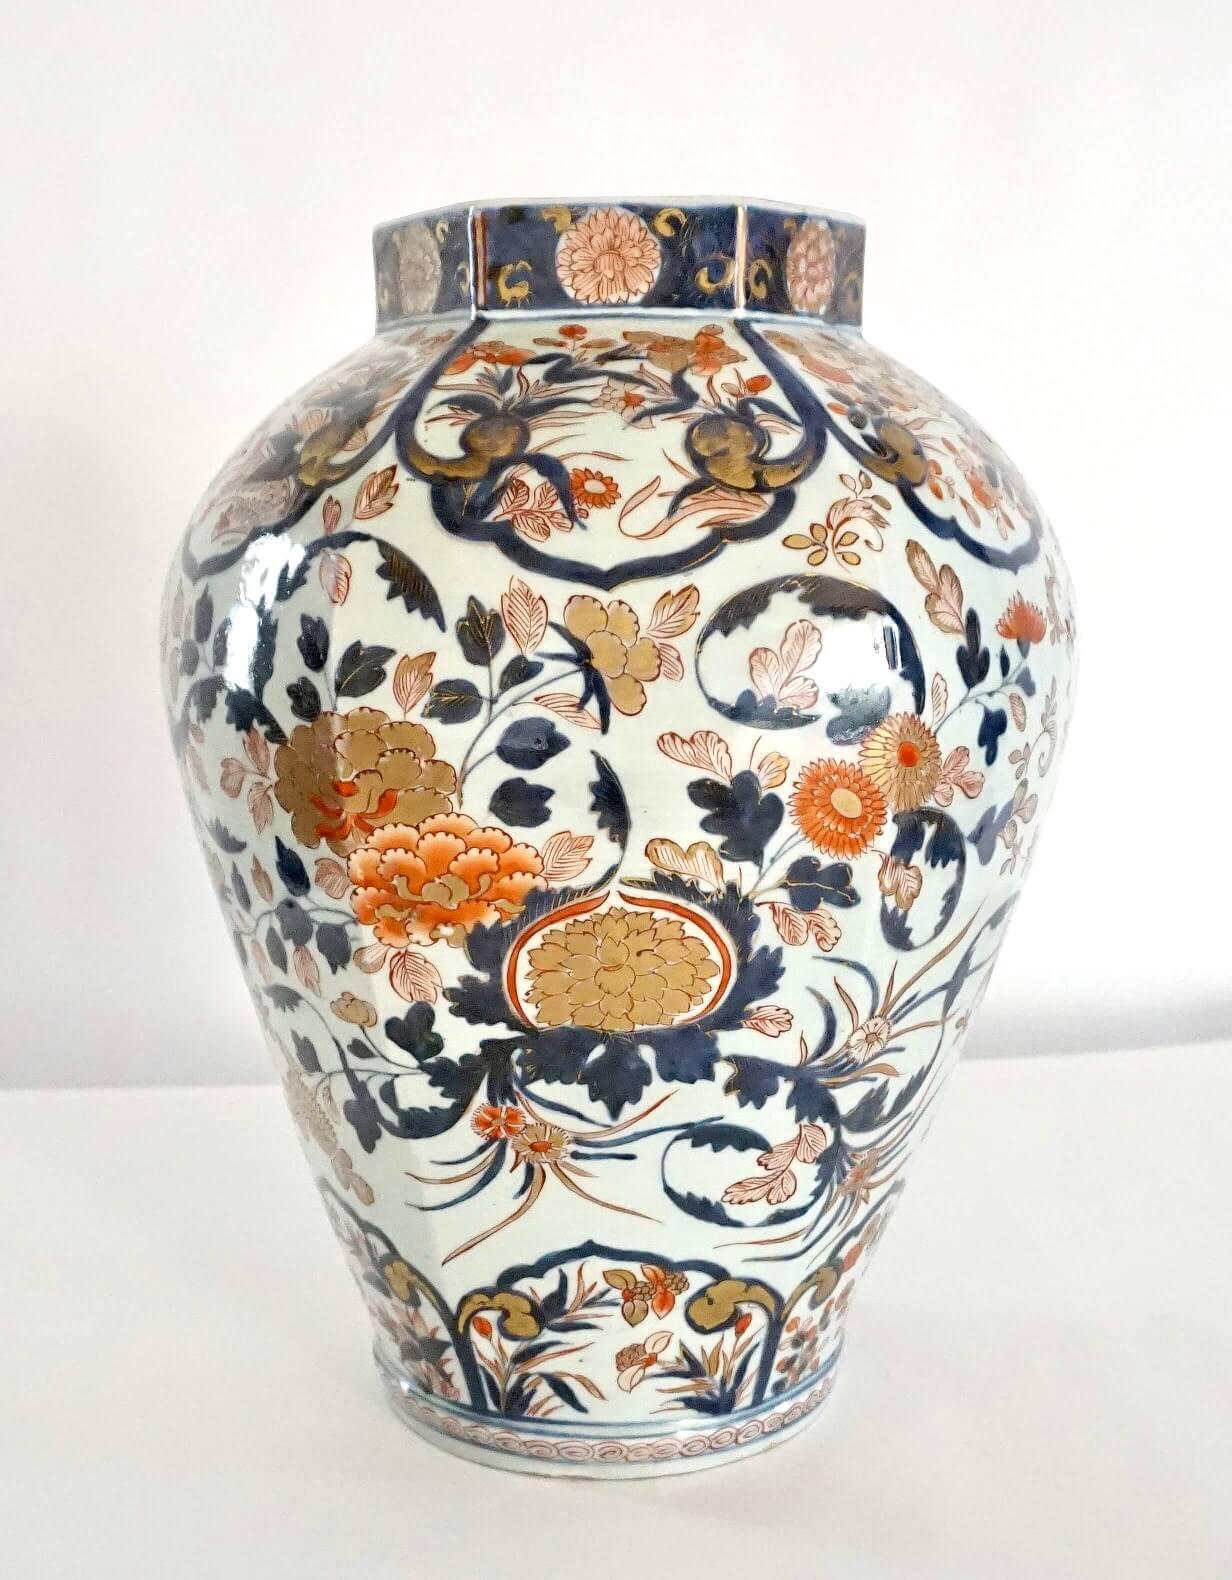 17th Century Japanese Edo Period Imari Porcelain Vase and Table Lamp, circa 1700